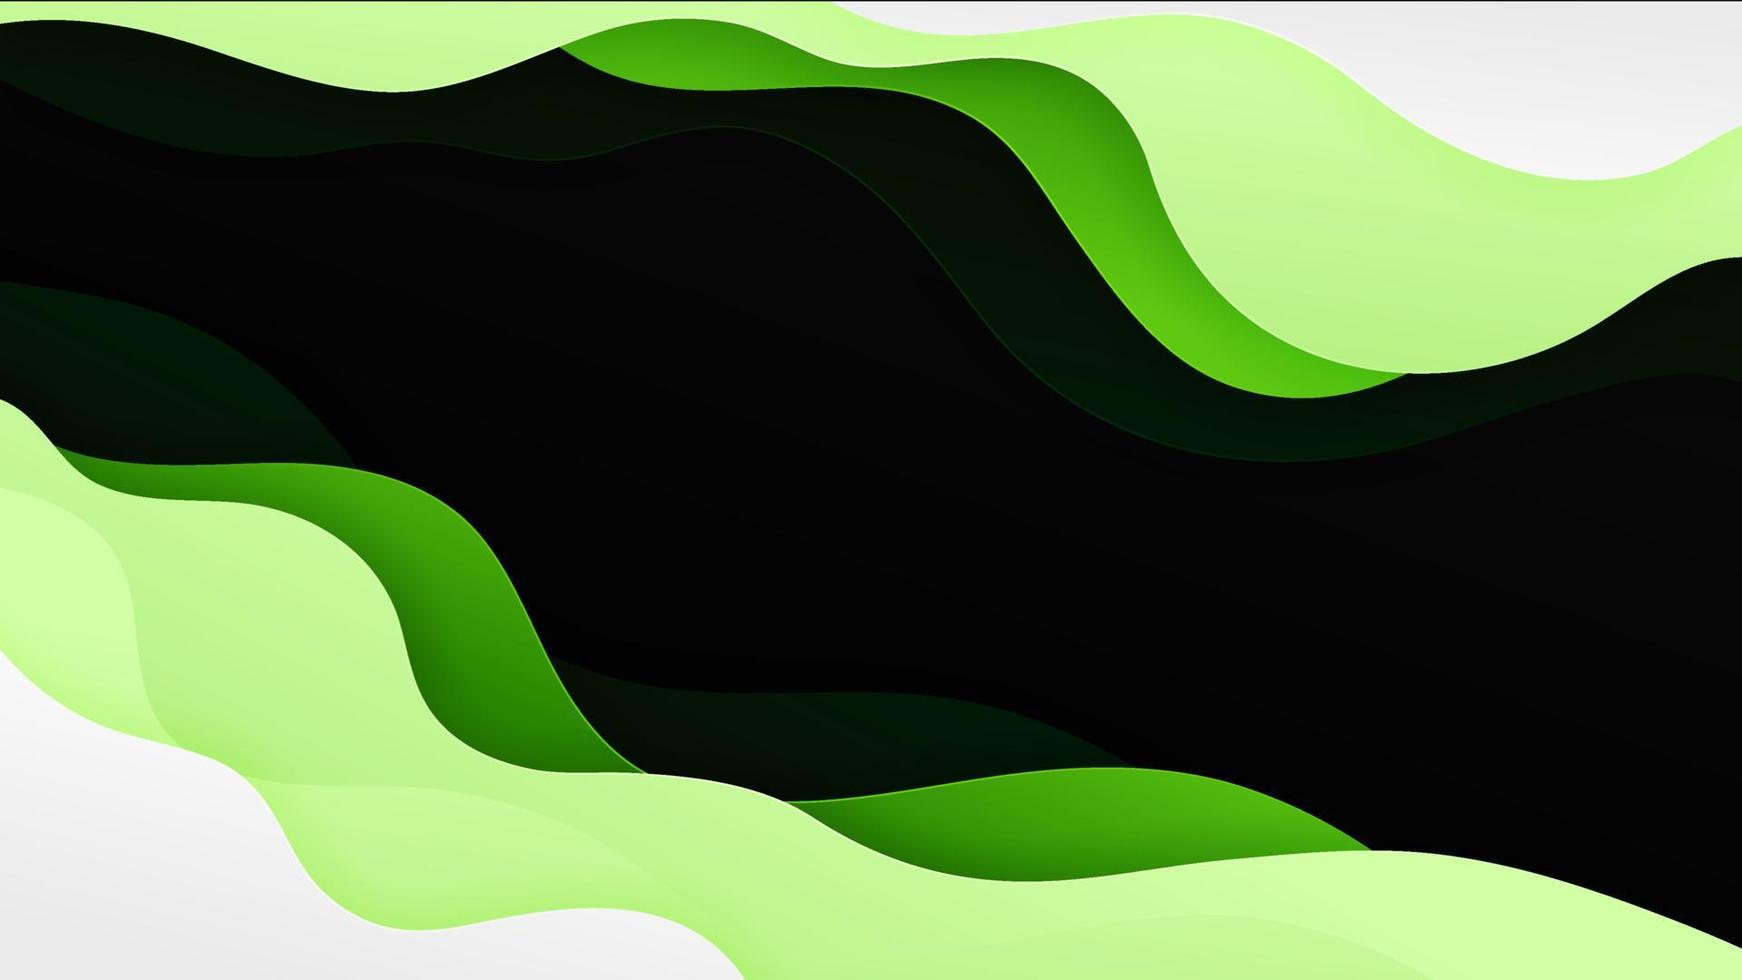 abstrato de vetor com cor gradiente e sombra dinâmica no fundo. fundo vetorial para papel de parede. eps 10